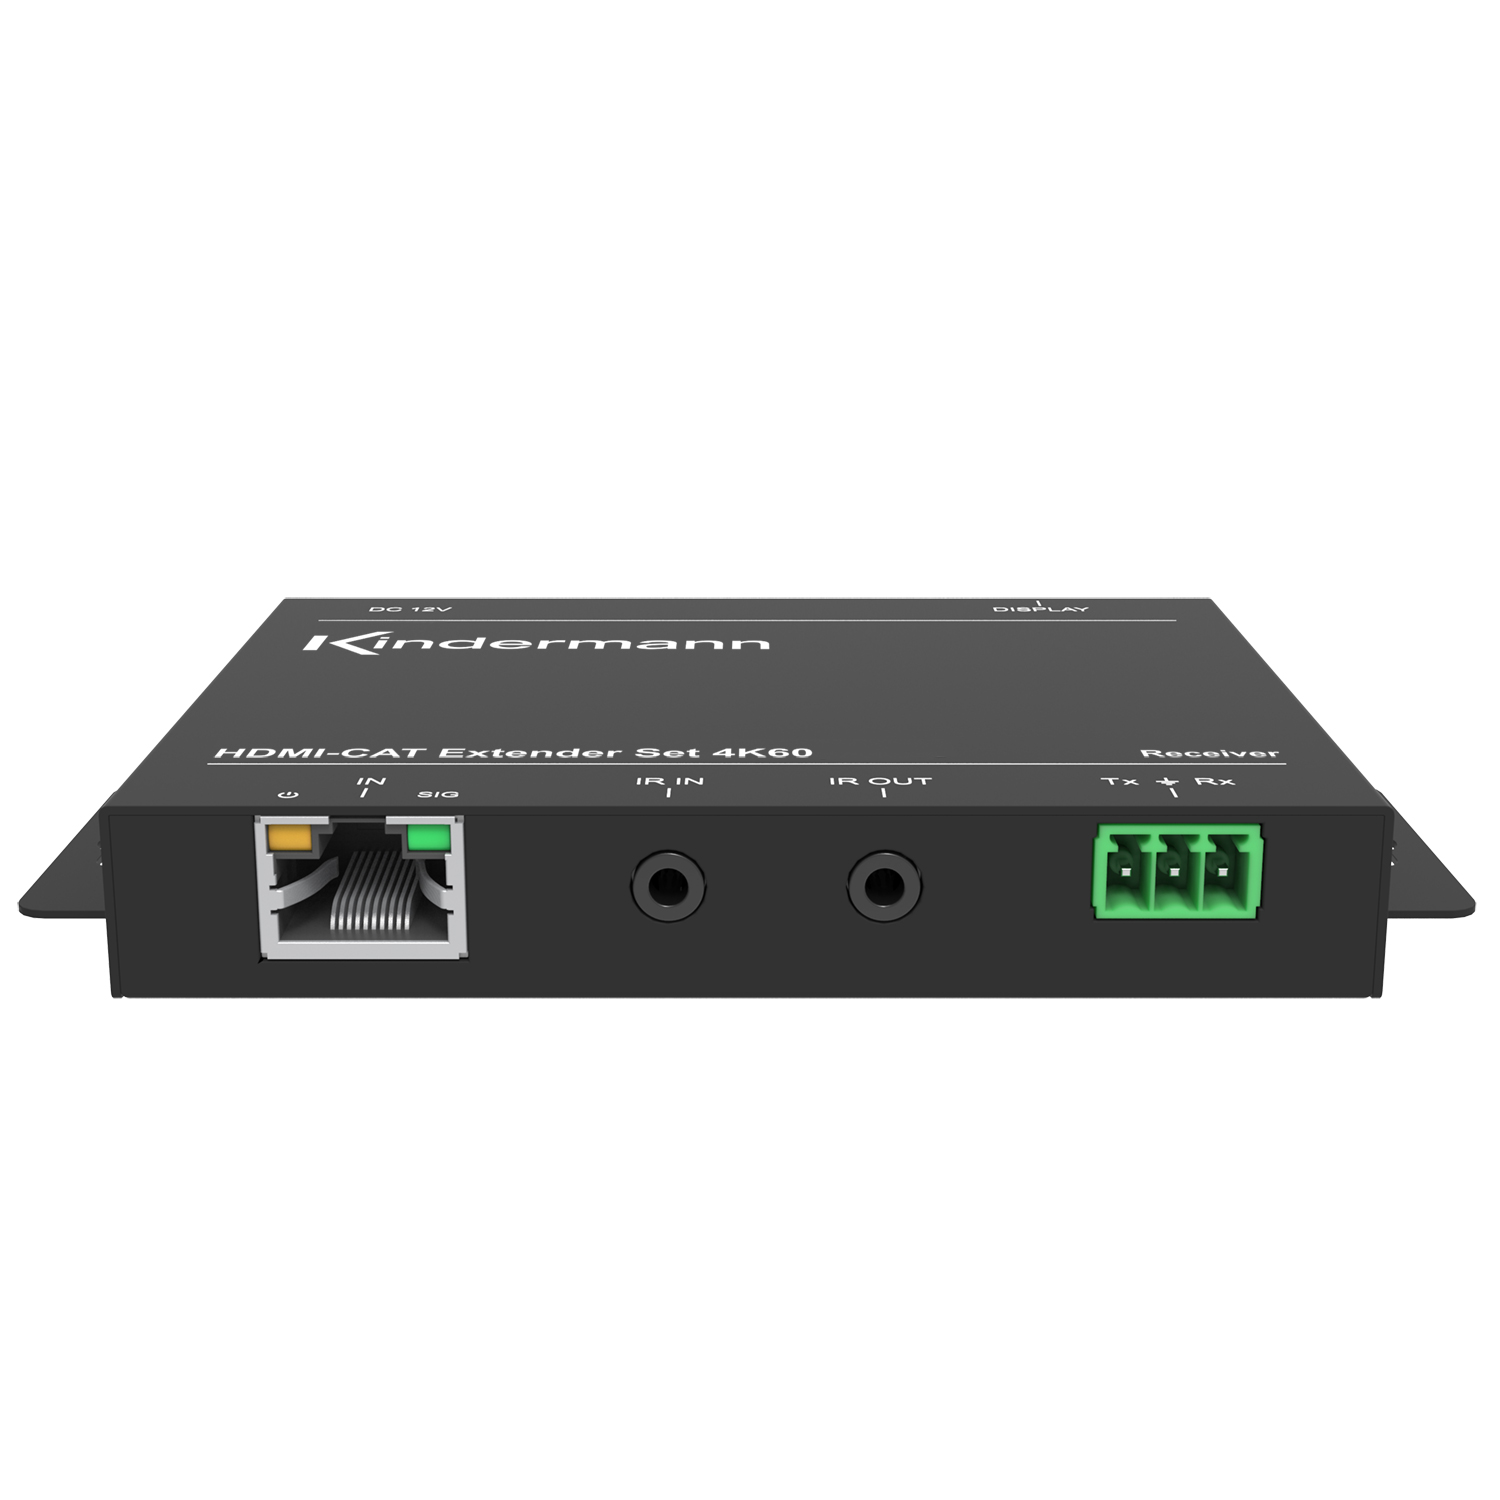 HDMI-CAT Extender Set 4K60